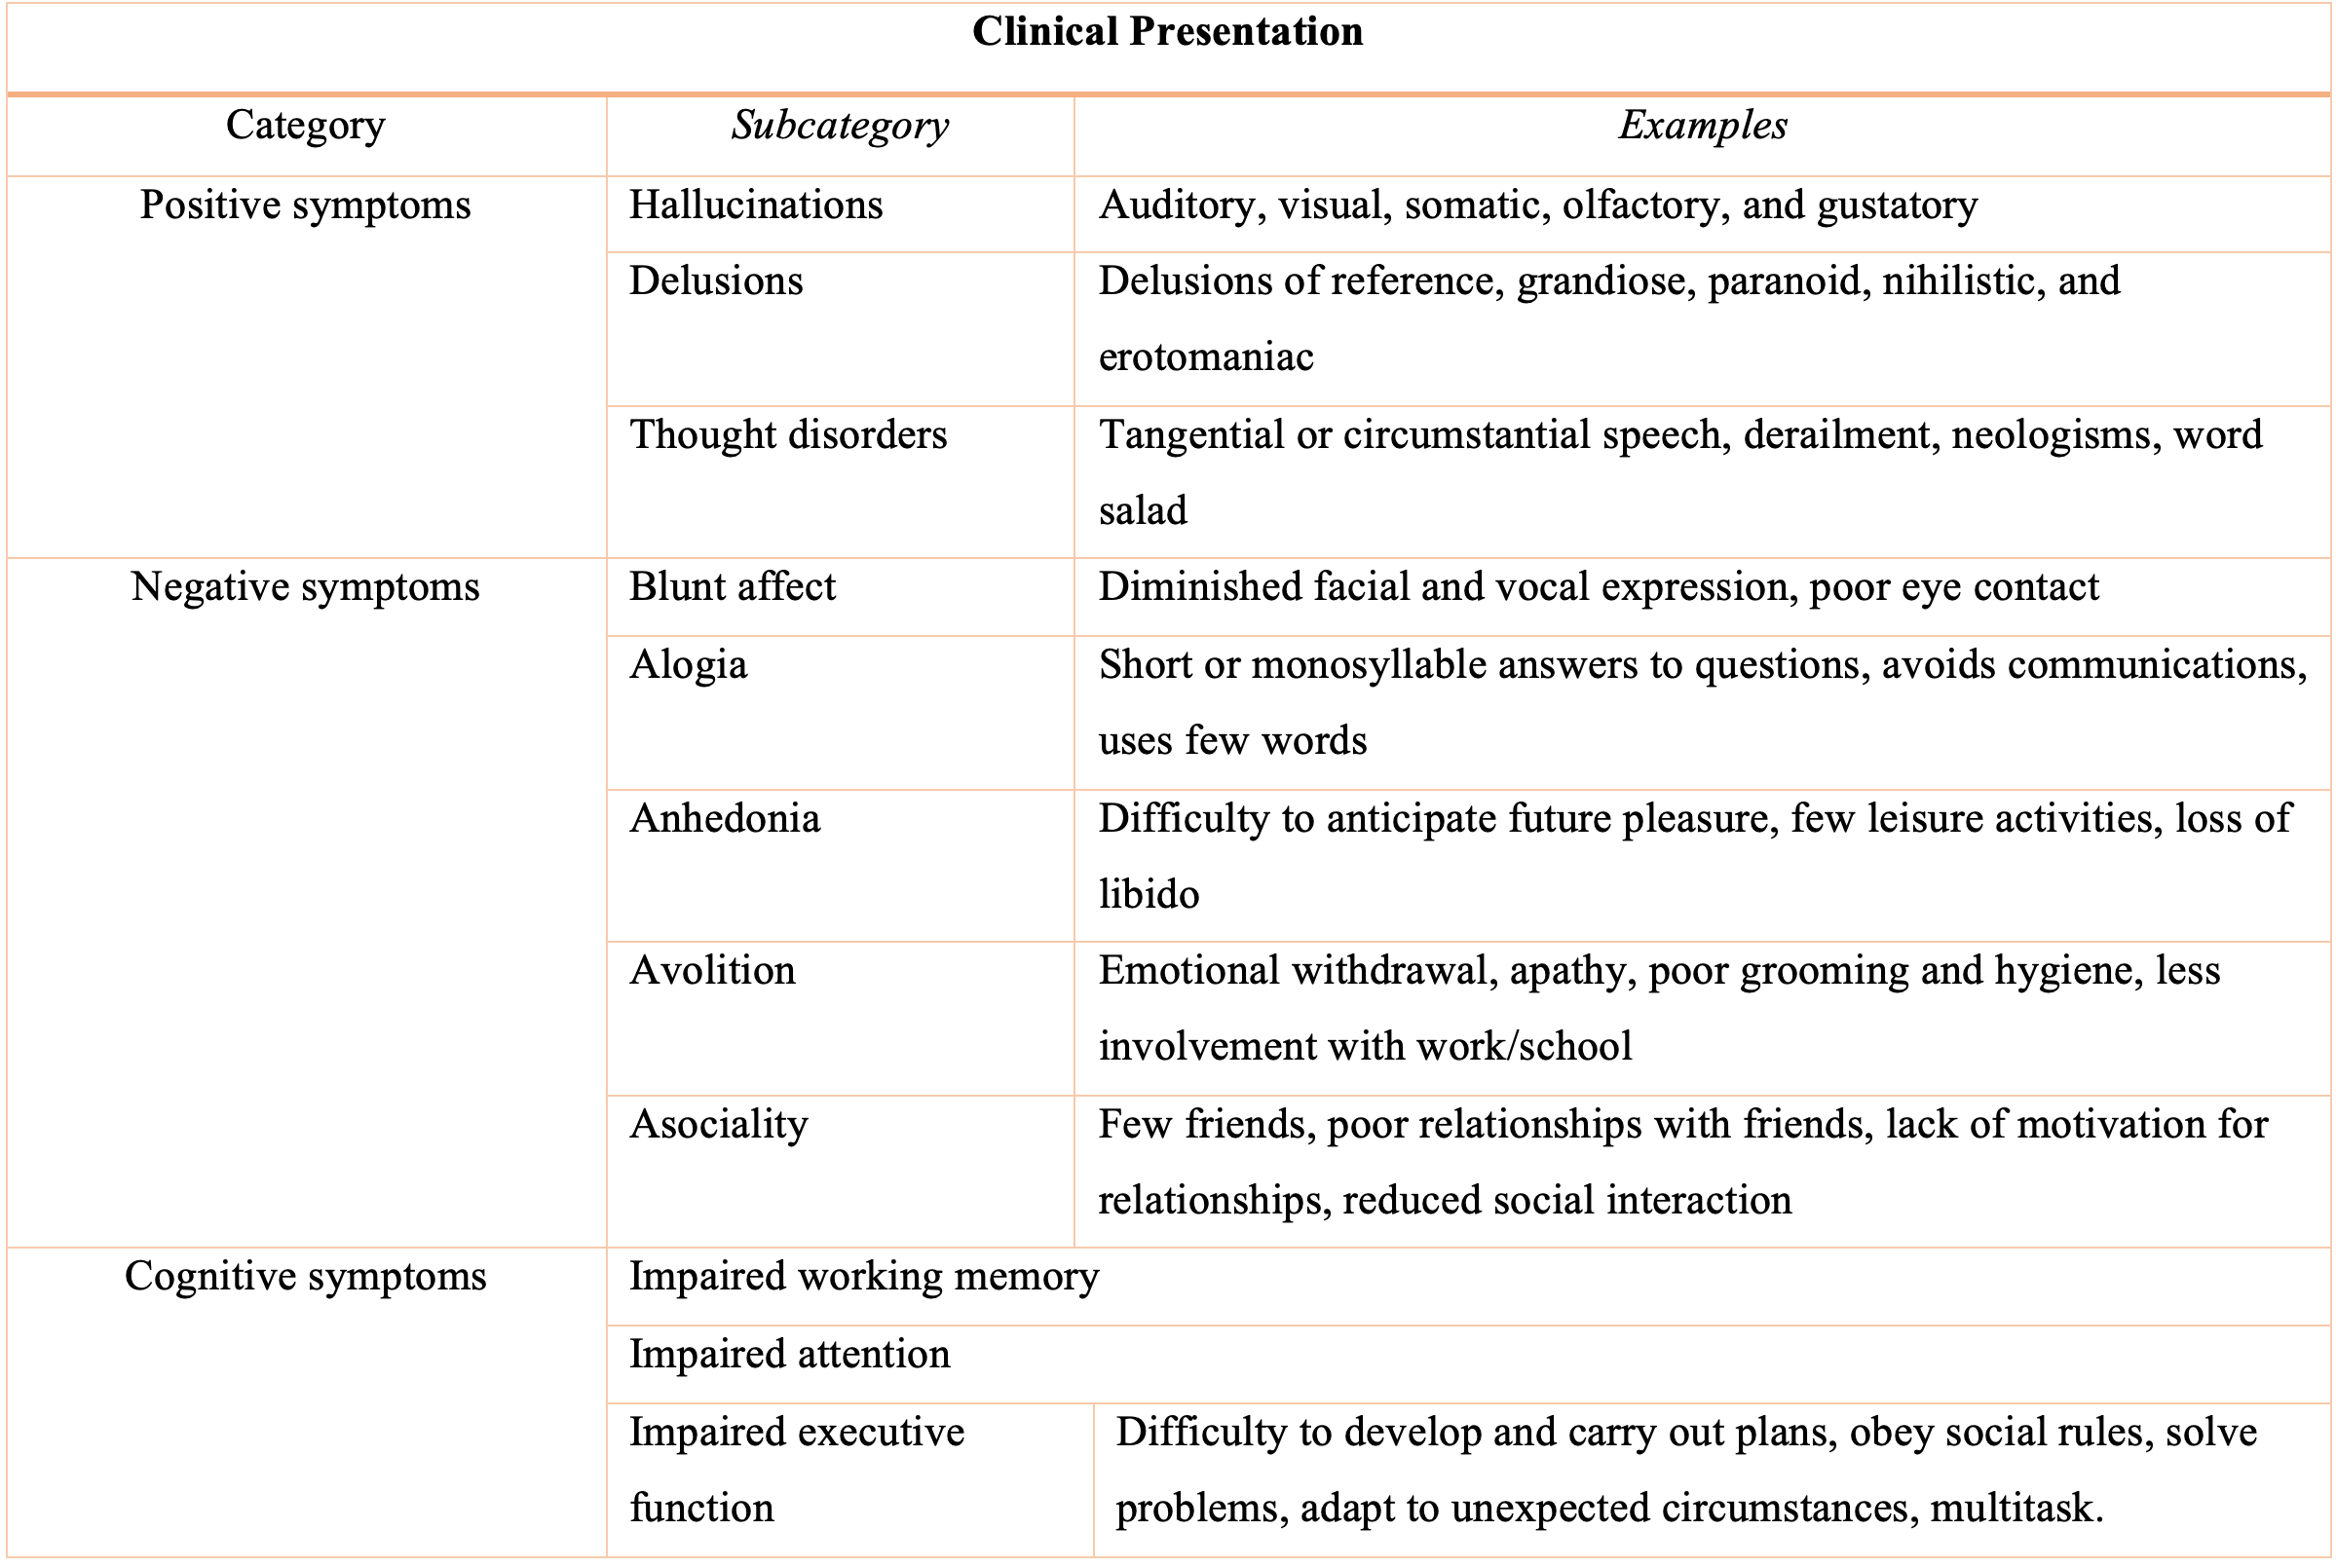 Table 2: Clinical presentation of schizophrenia